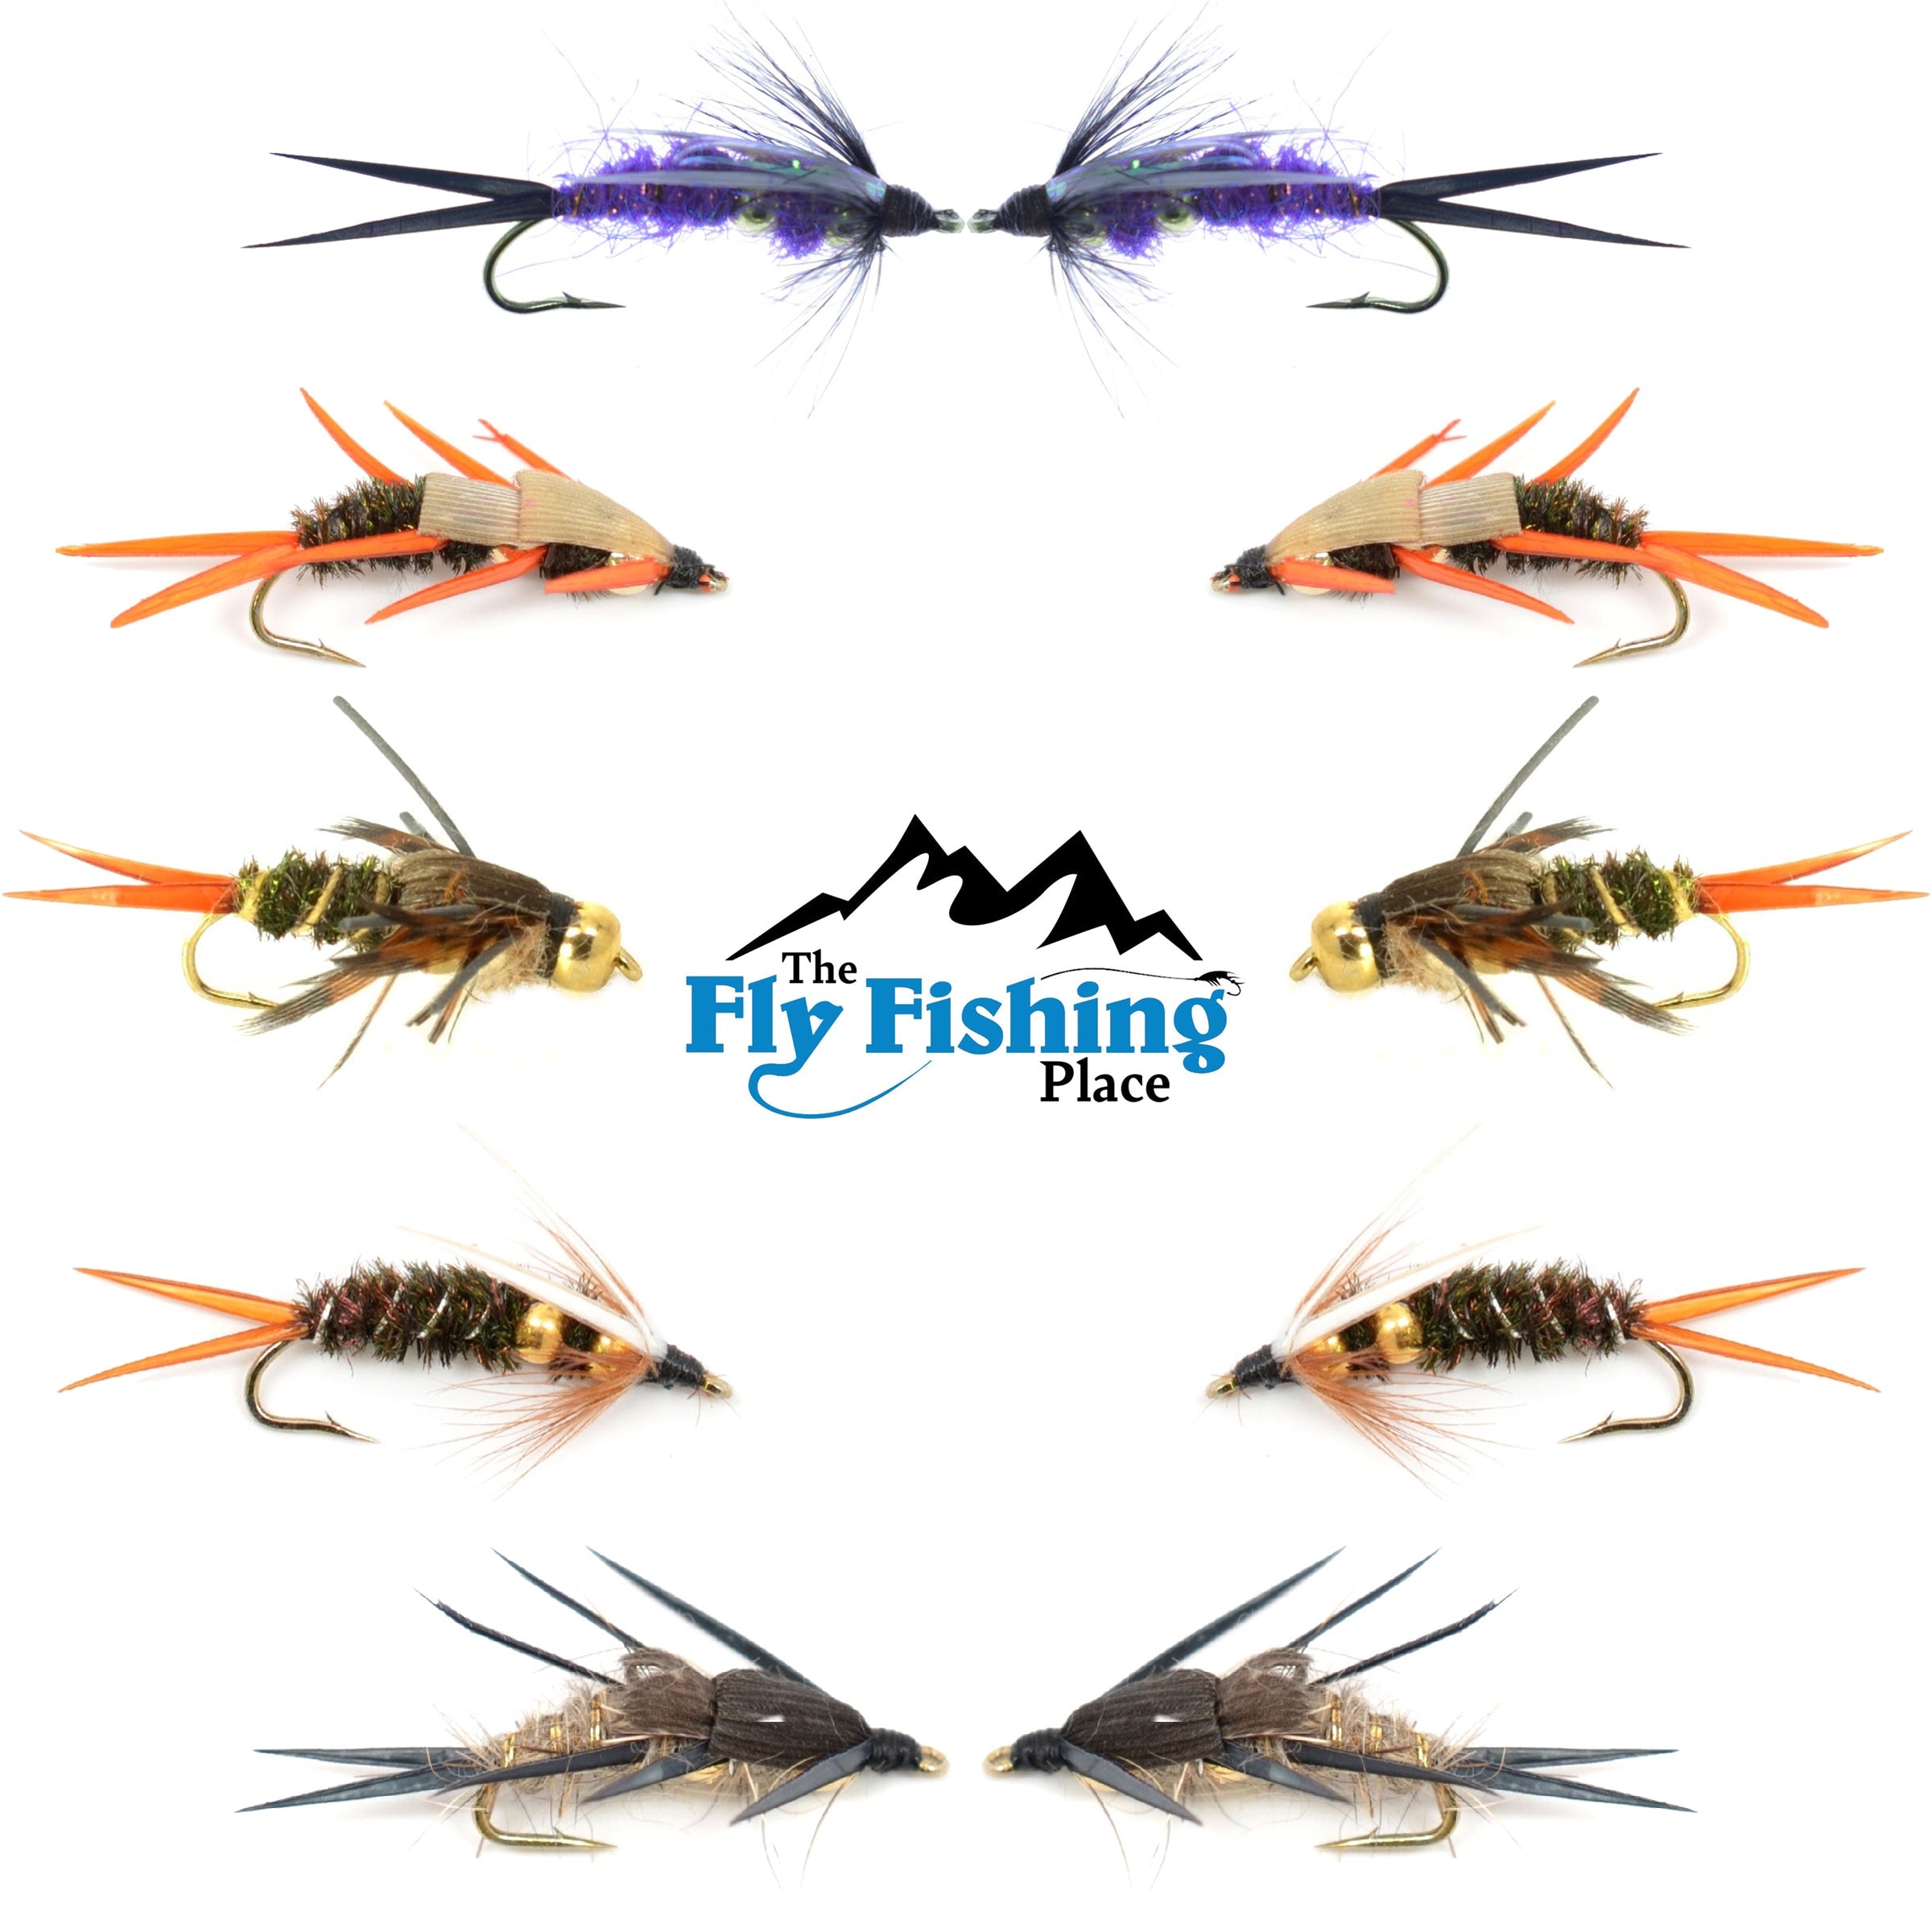 Basics Collection - Double Bead Head Nymph Assortment - 10 Wet Flies - 5 Patterns - Hook Size 14